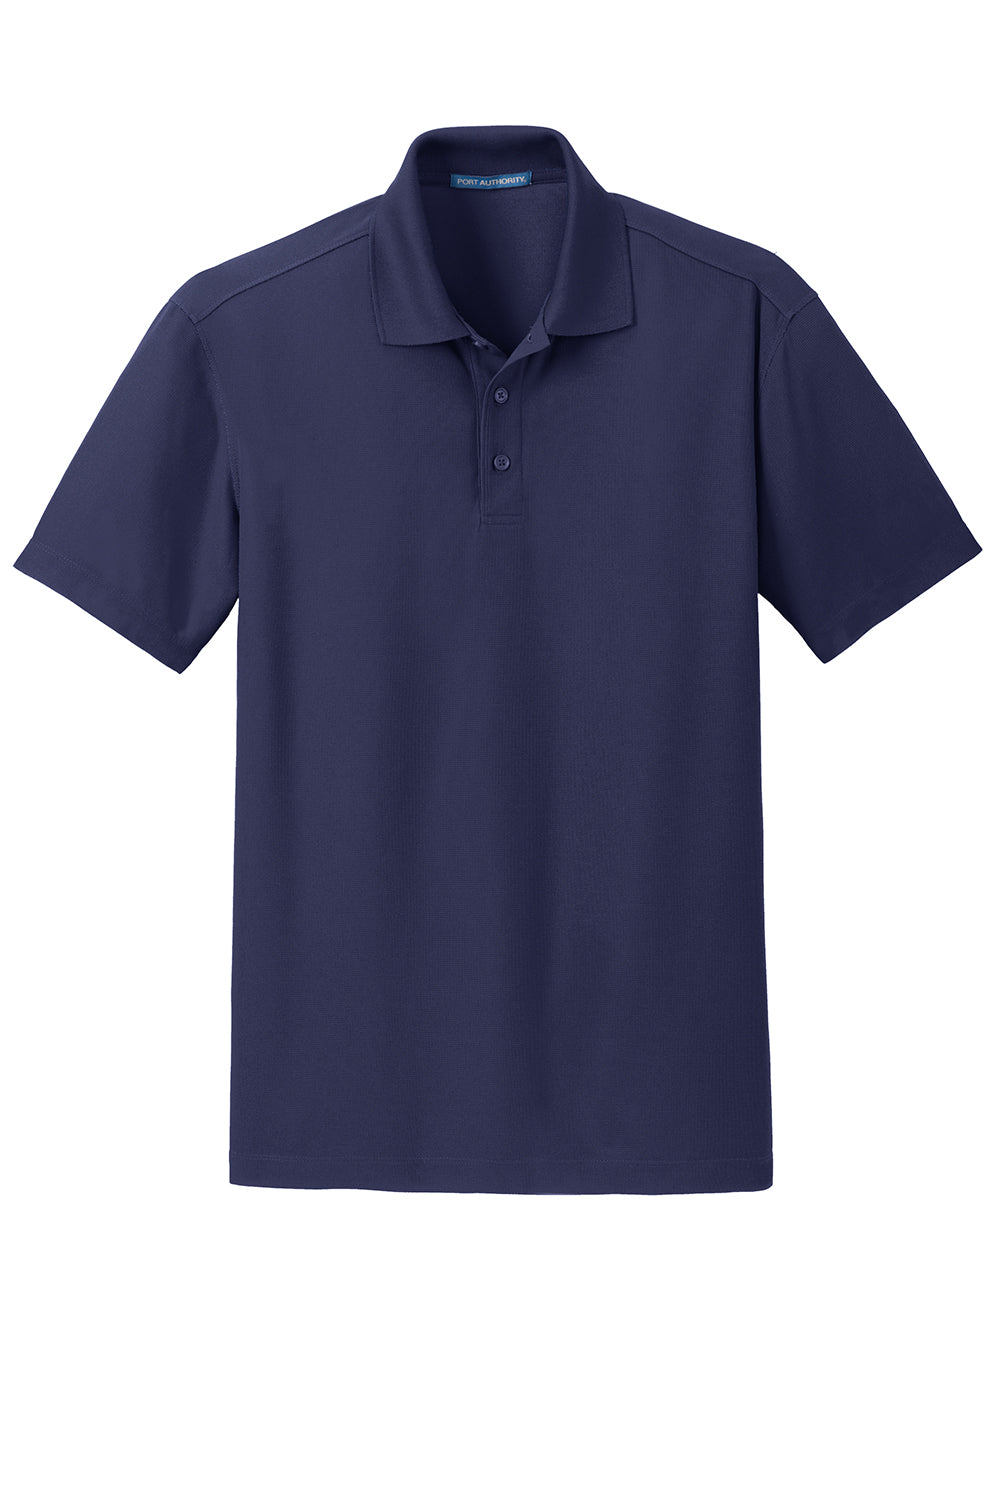 Port Authority K572 Mens Dry Zone Moisture Wicking Short Sleeve Polo Shirt Navy Blue Flat Front